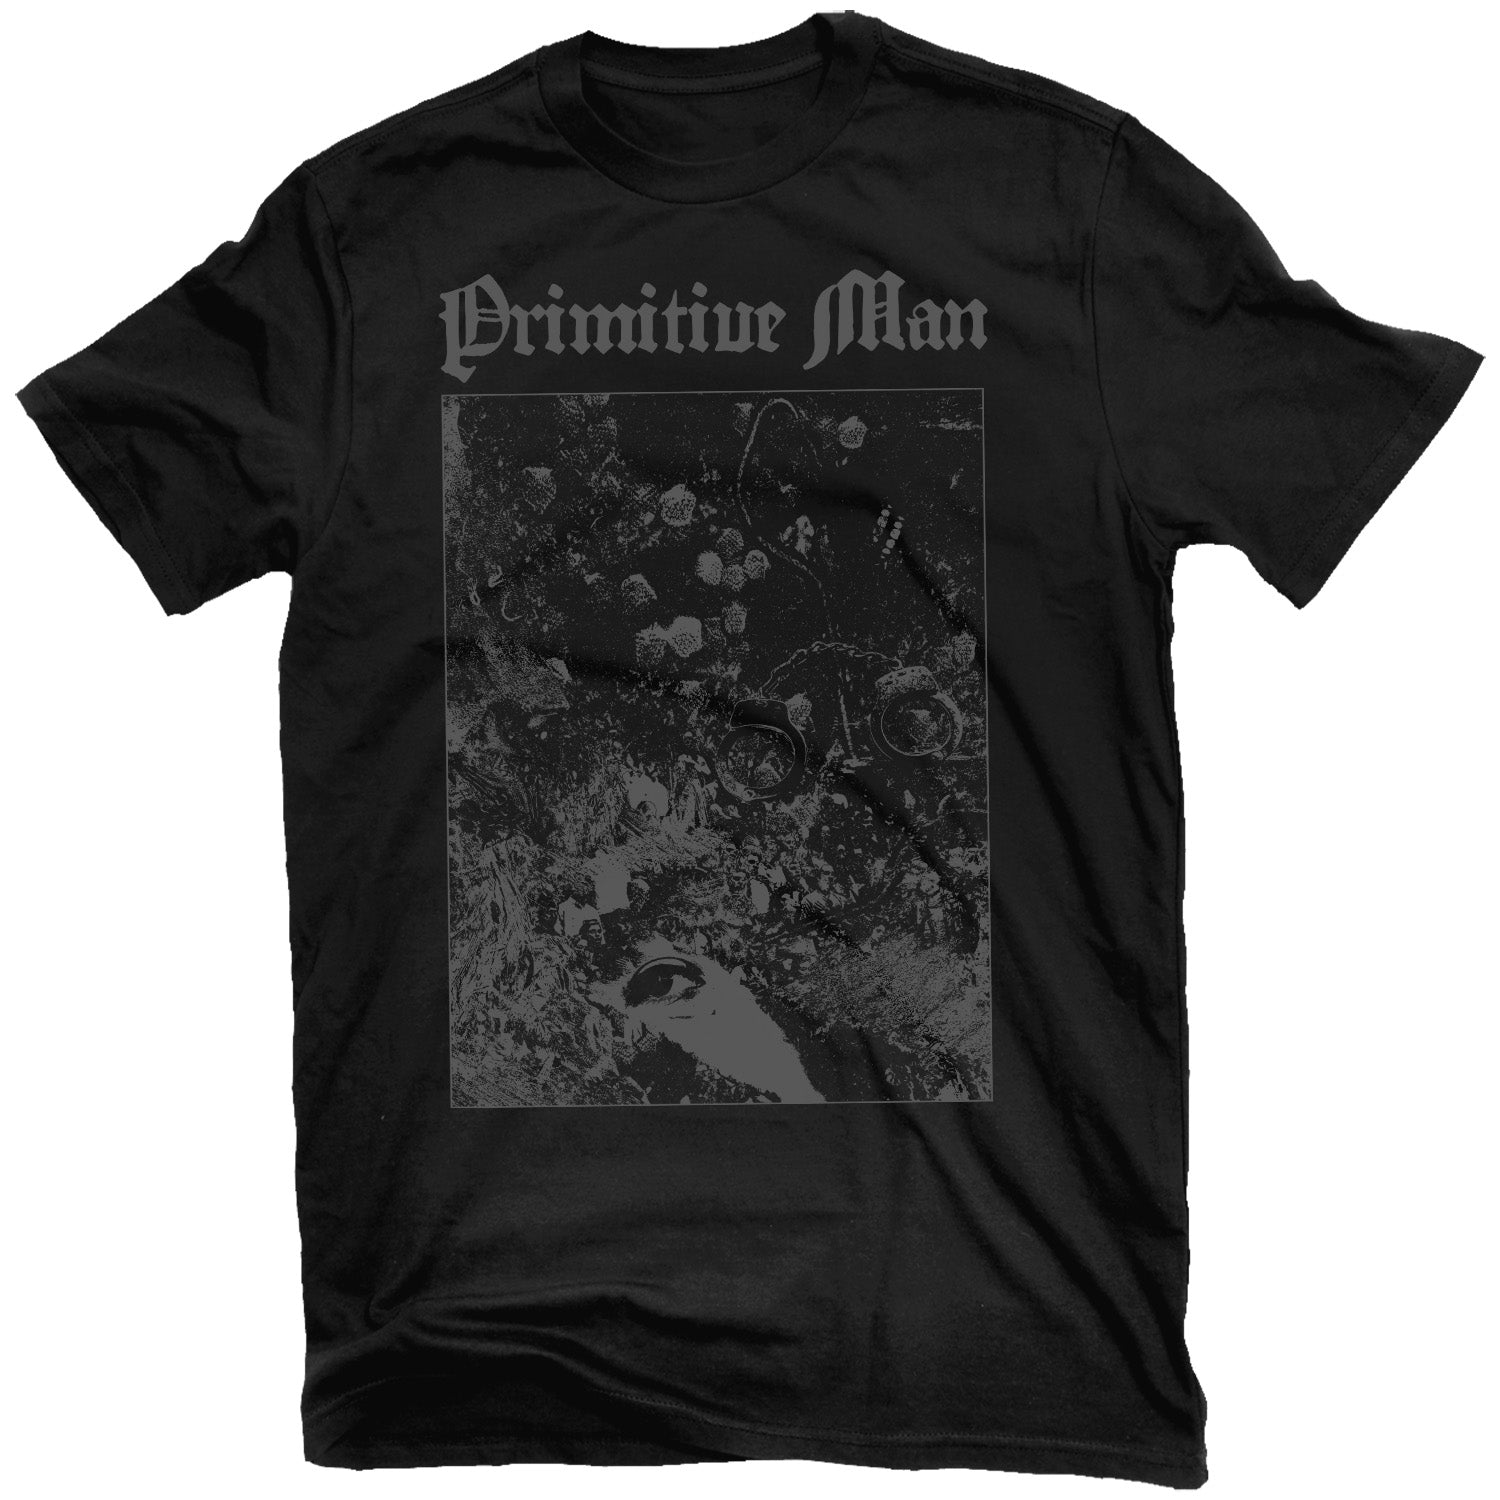 Primitive Man "Love Under Will" T-Shirt